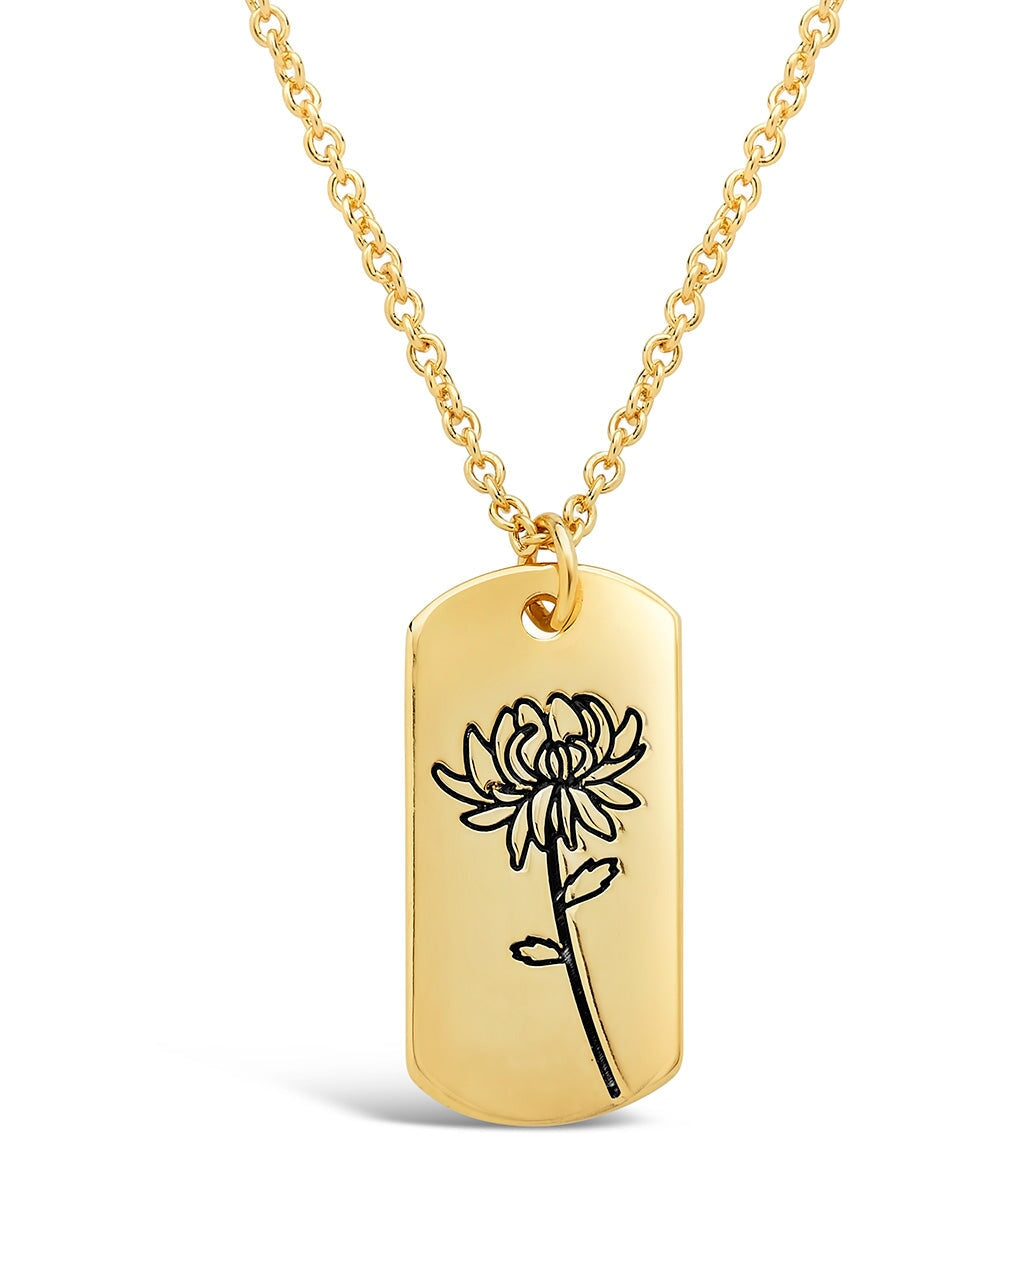 Birth Flower Pendant Necklace Sterling Forever Gold November / Chrysanthemum 